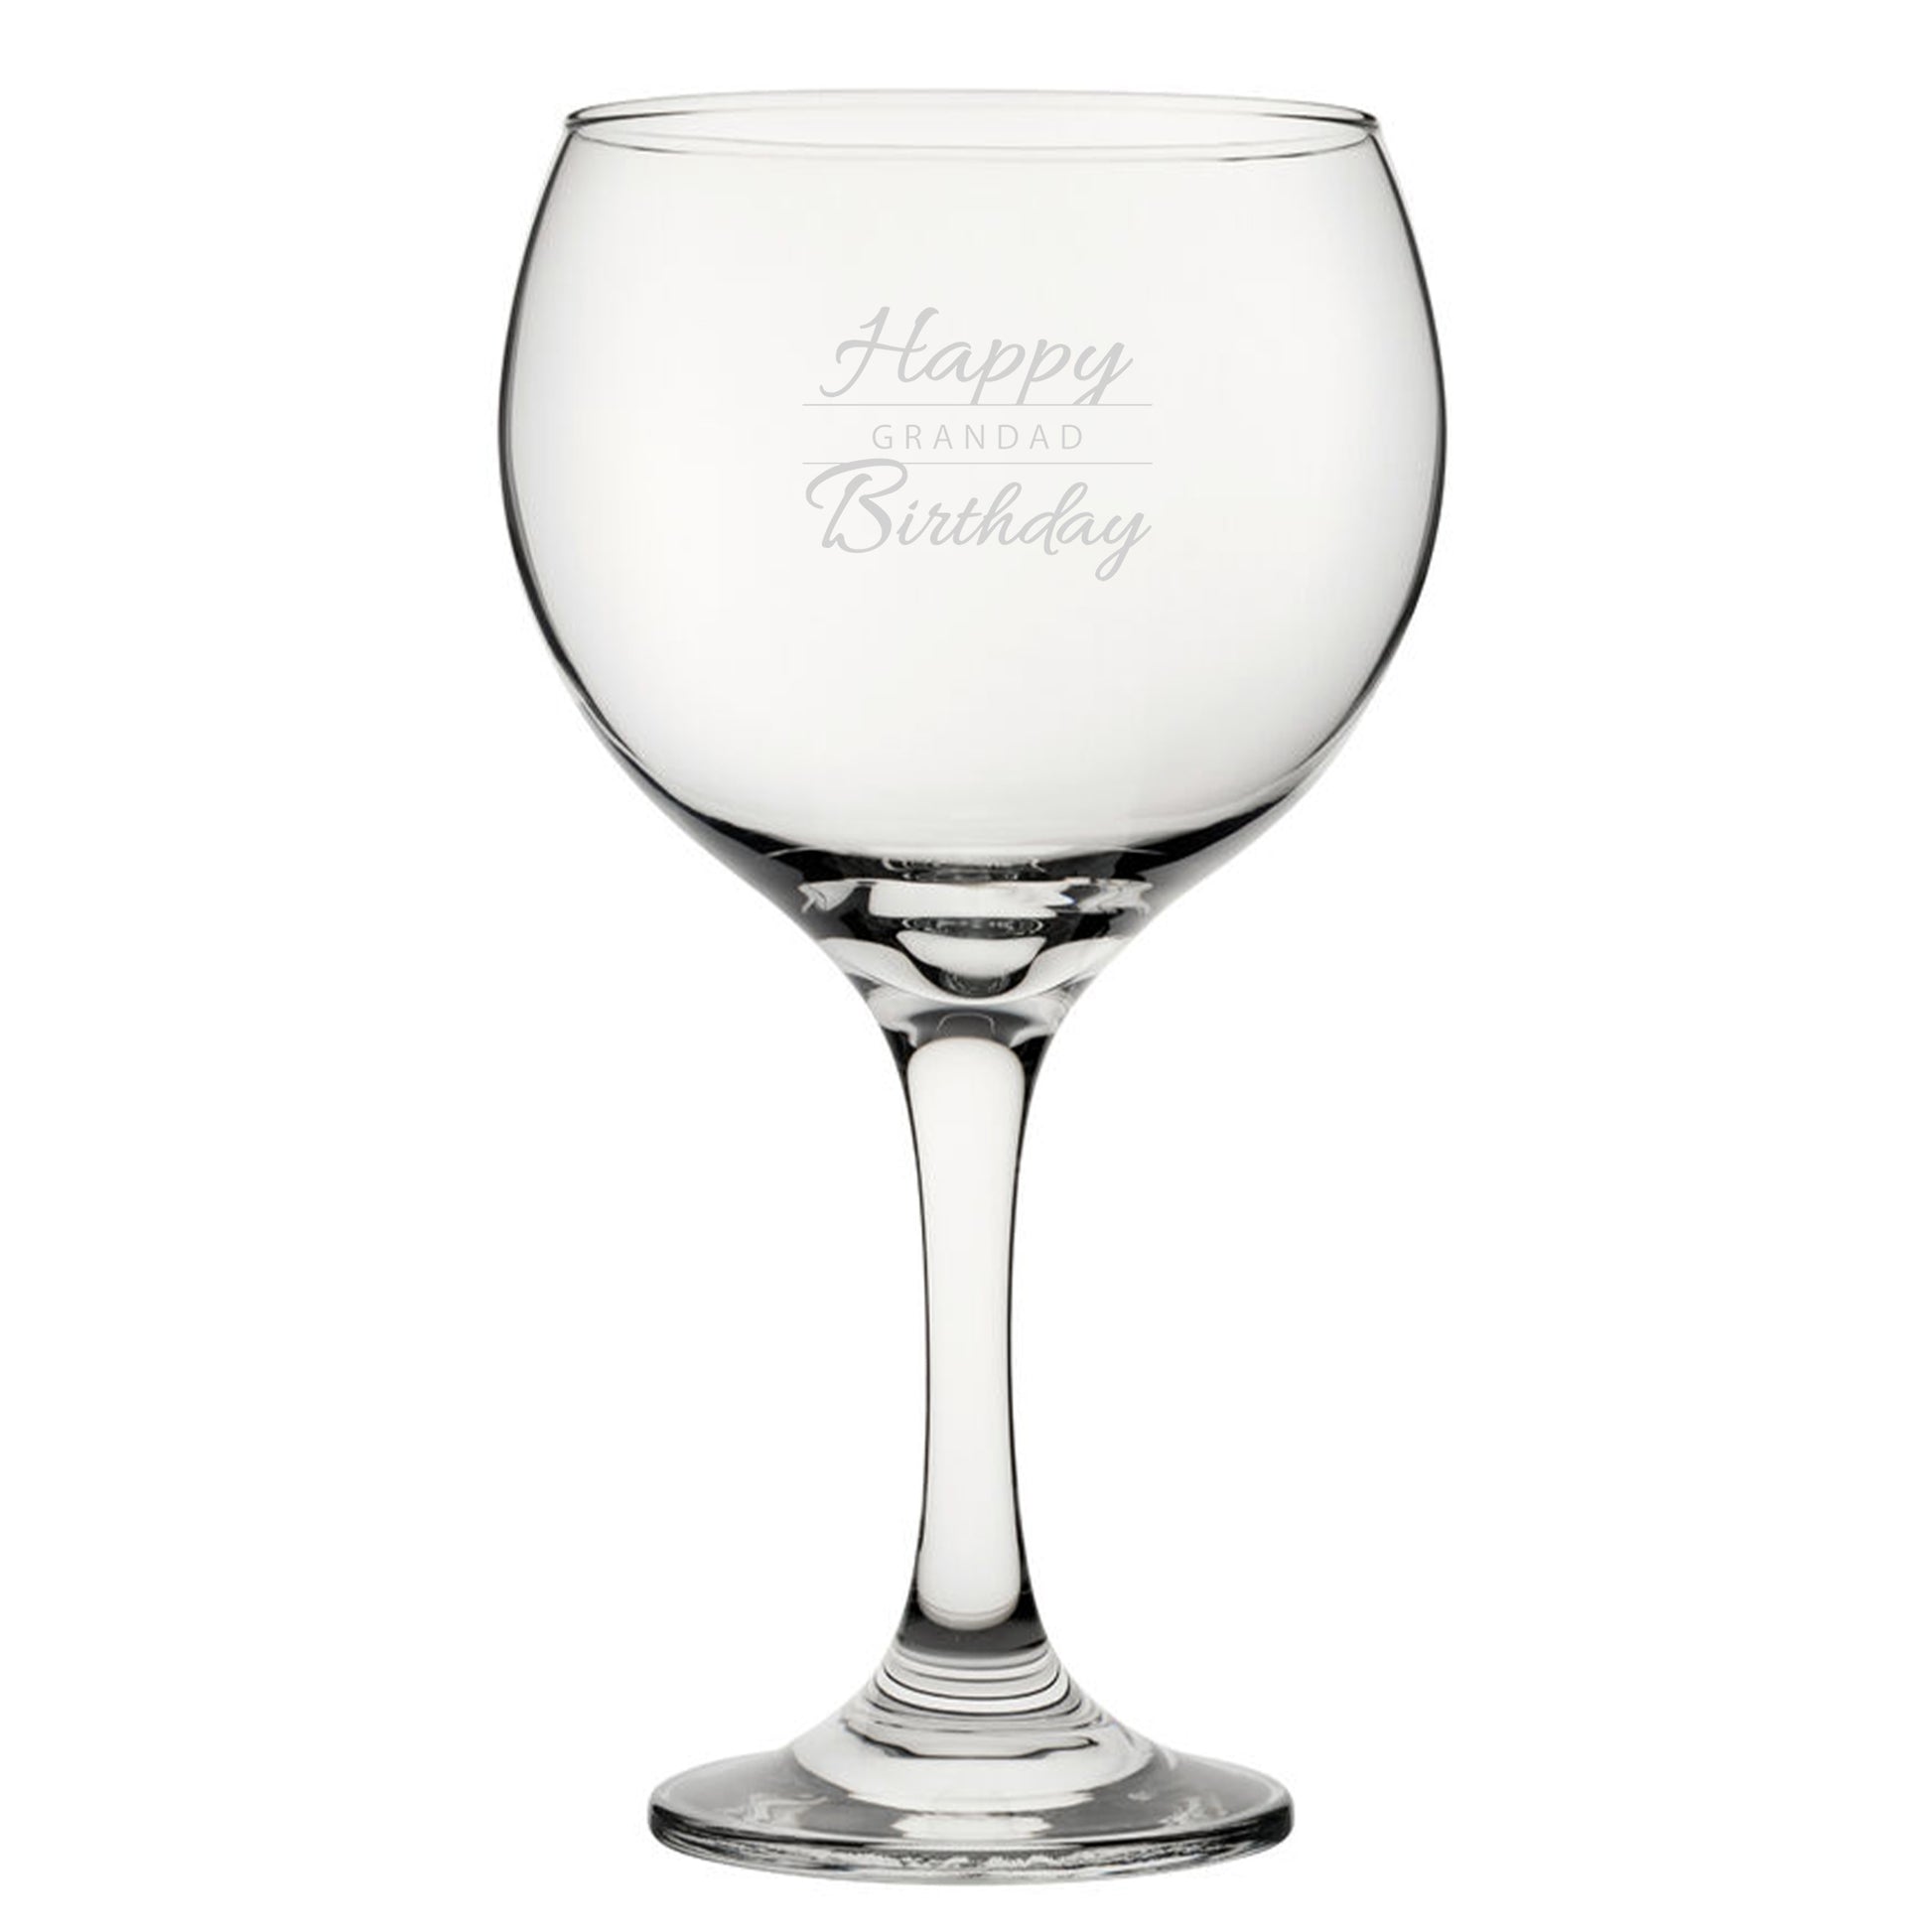 Happy Birthday Grandad Modern Design - Engraved Novelty Gin Balloon Cocktail Glass Image 2